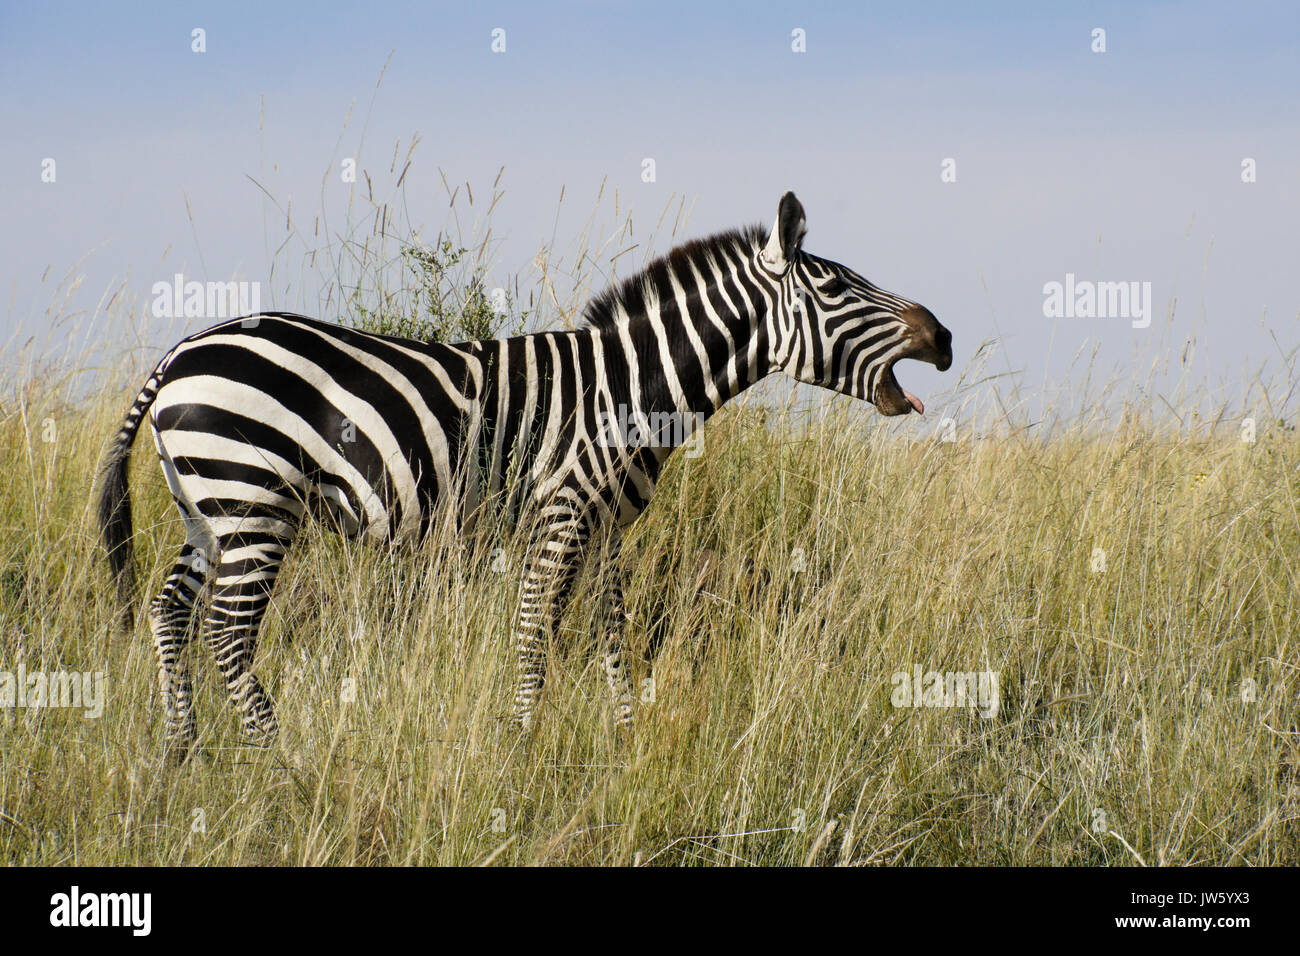 Burchell's (common or plains) zebra vocalizing, Masai Mara Game Reserve, Kenya Stock Photo